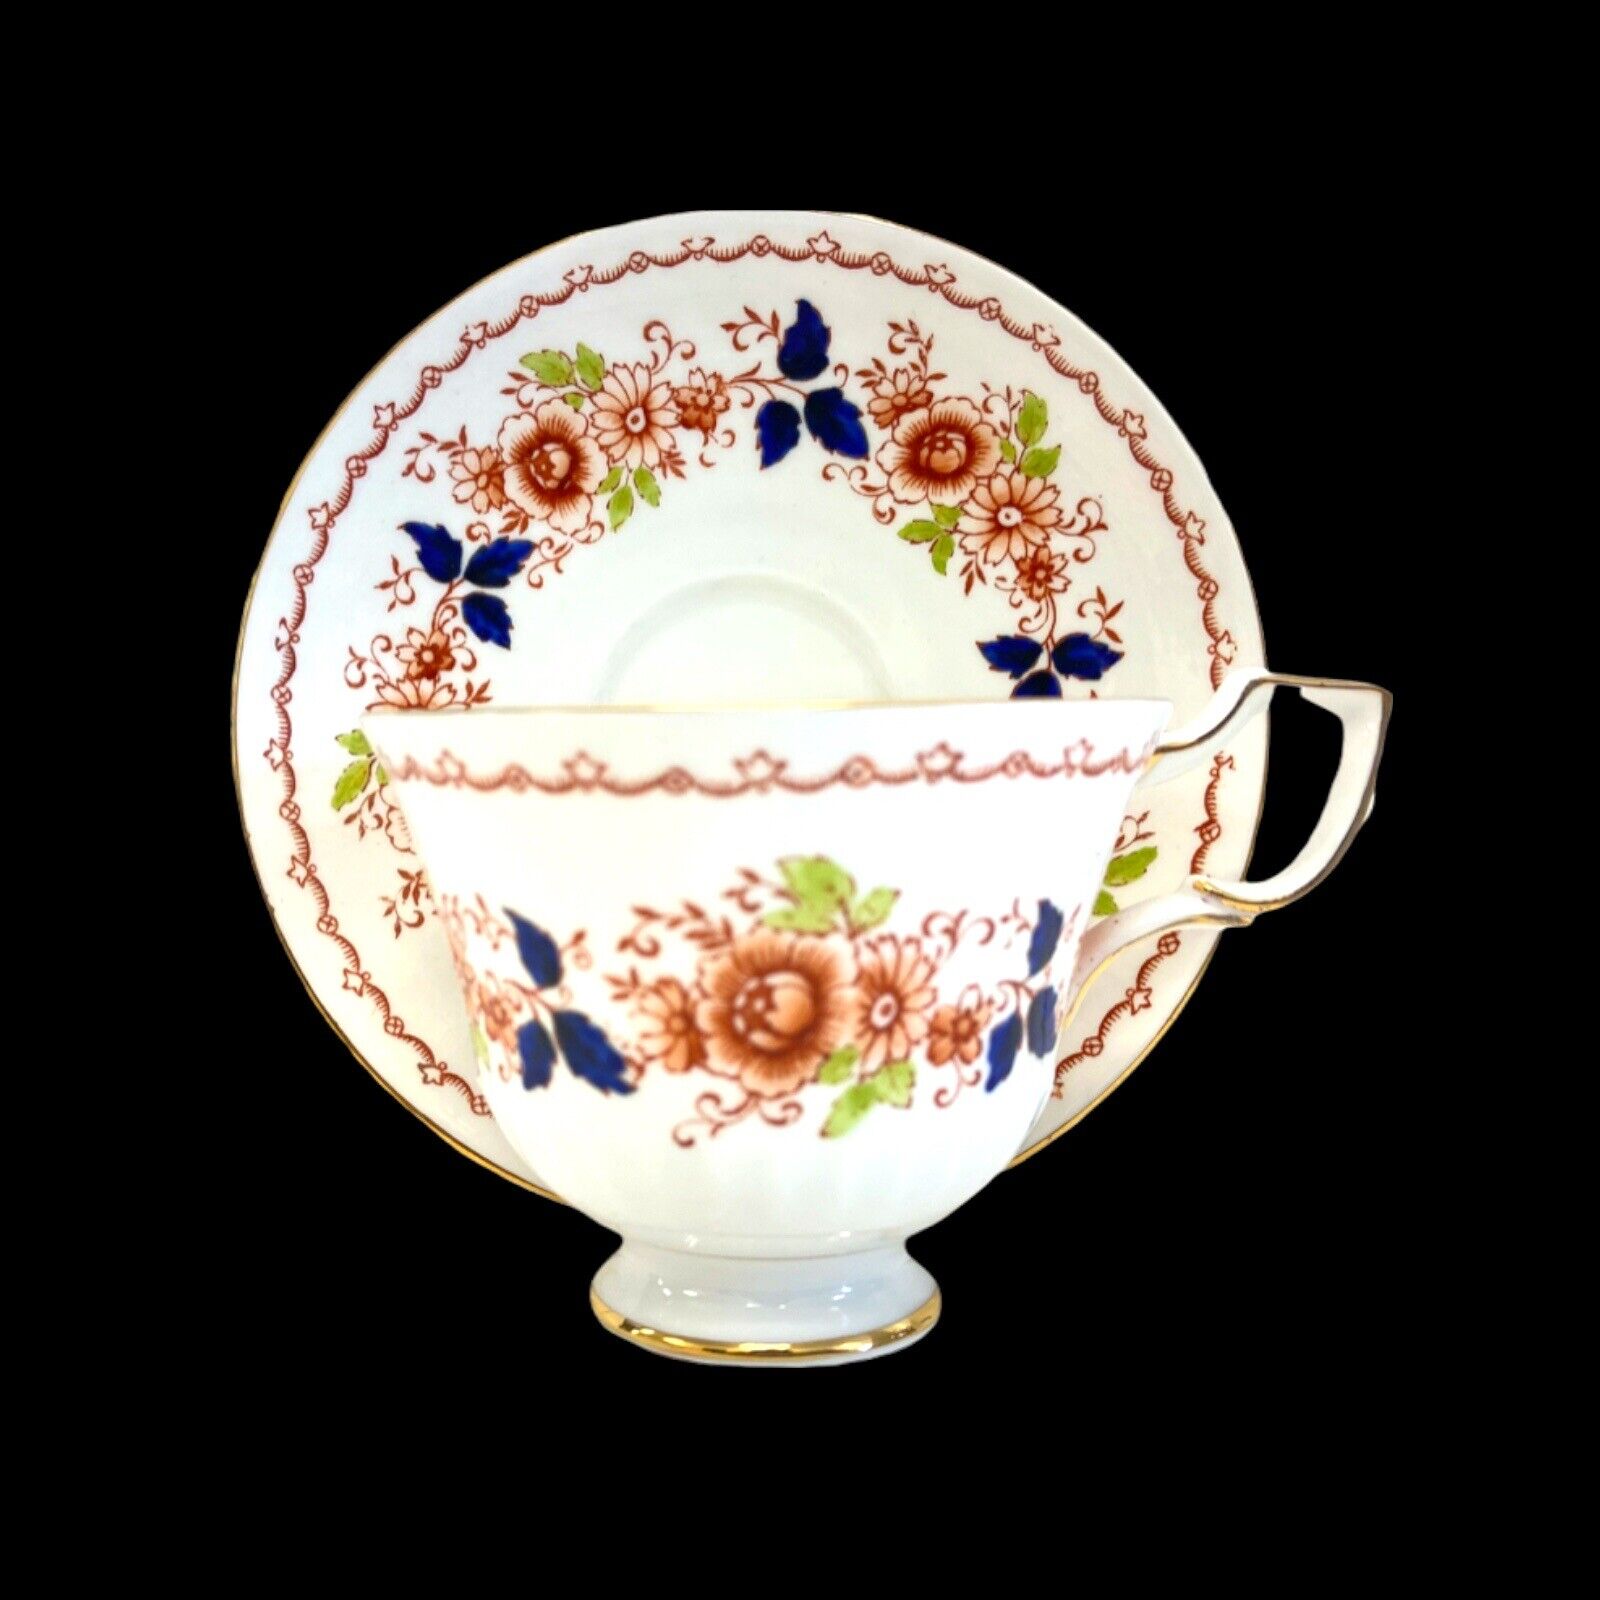 Antique Royal Tuscan Porcelain Teacup & Saucer (D-2439)